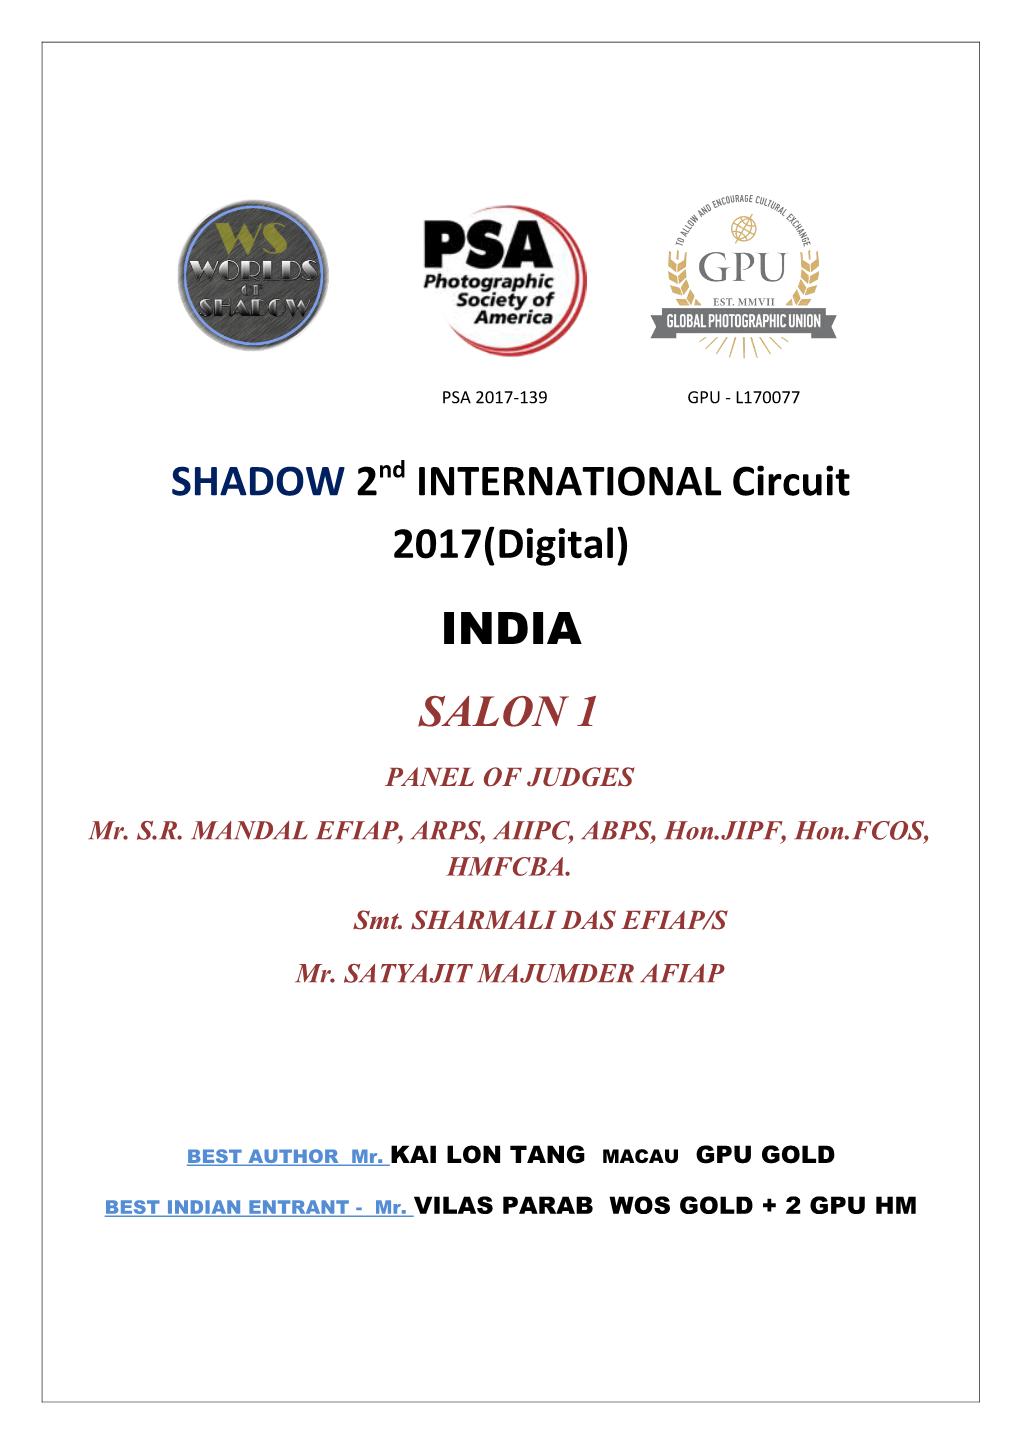 Shadow2nd INTERNATIONAL Circuit 2017(Digital)